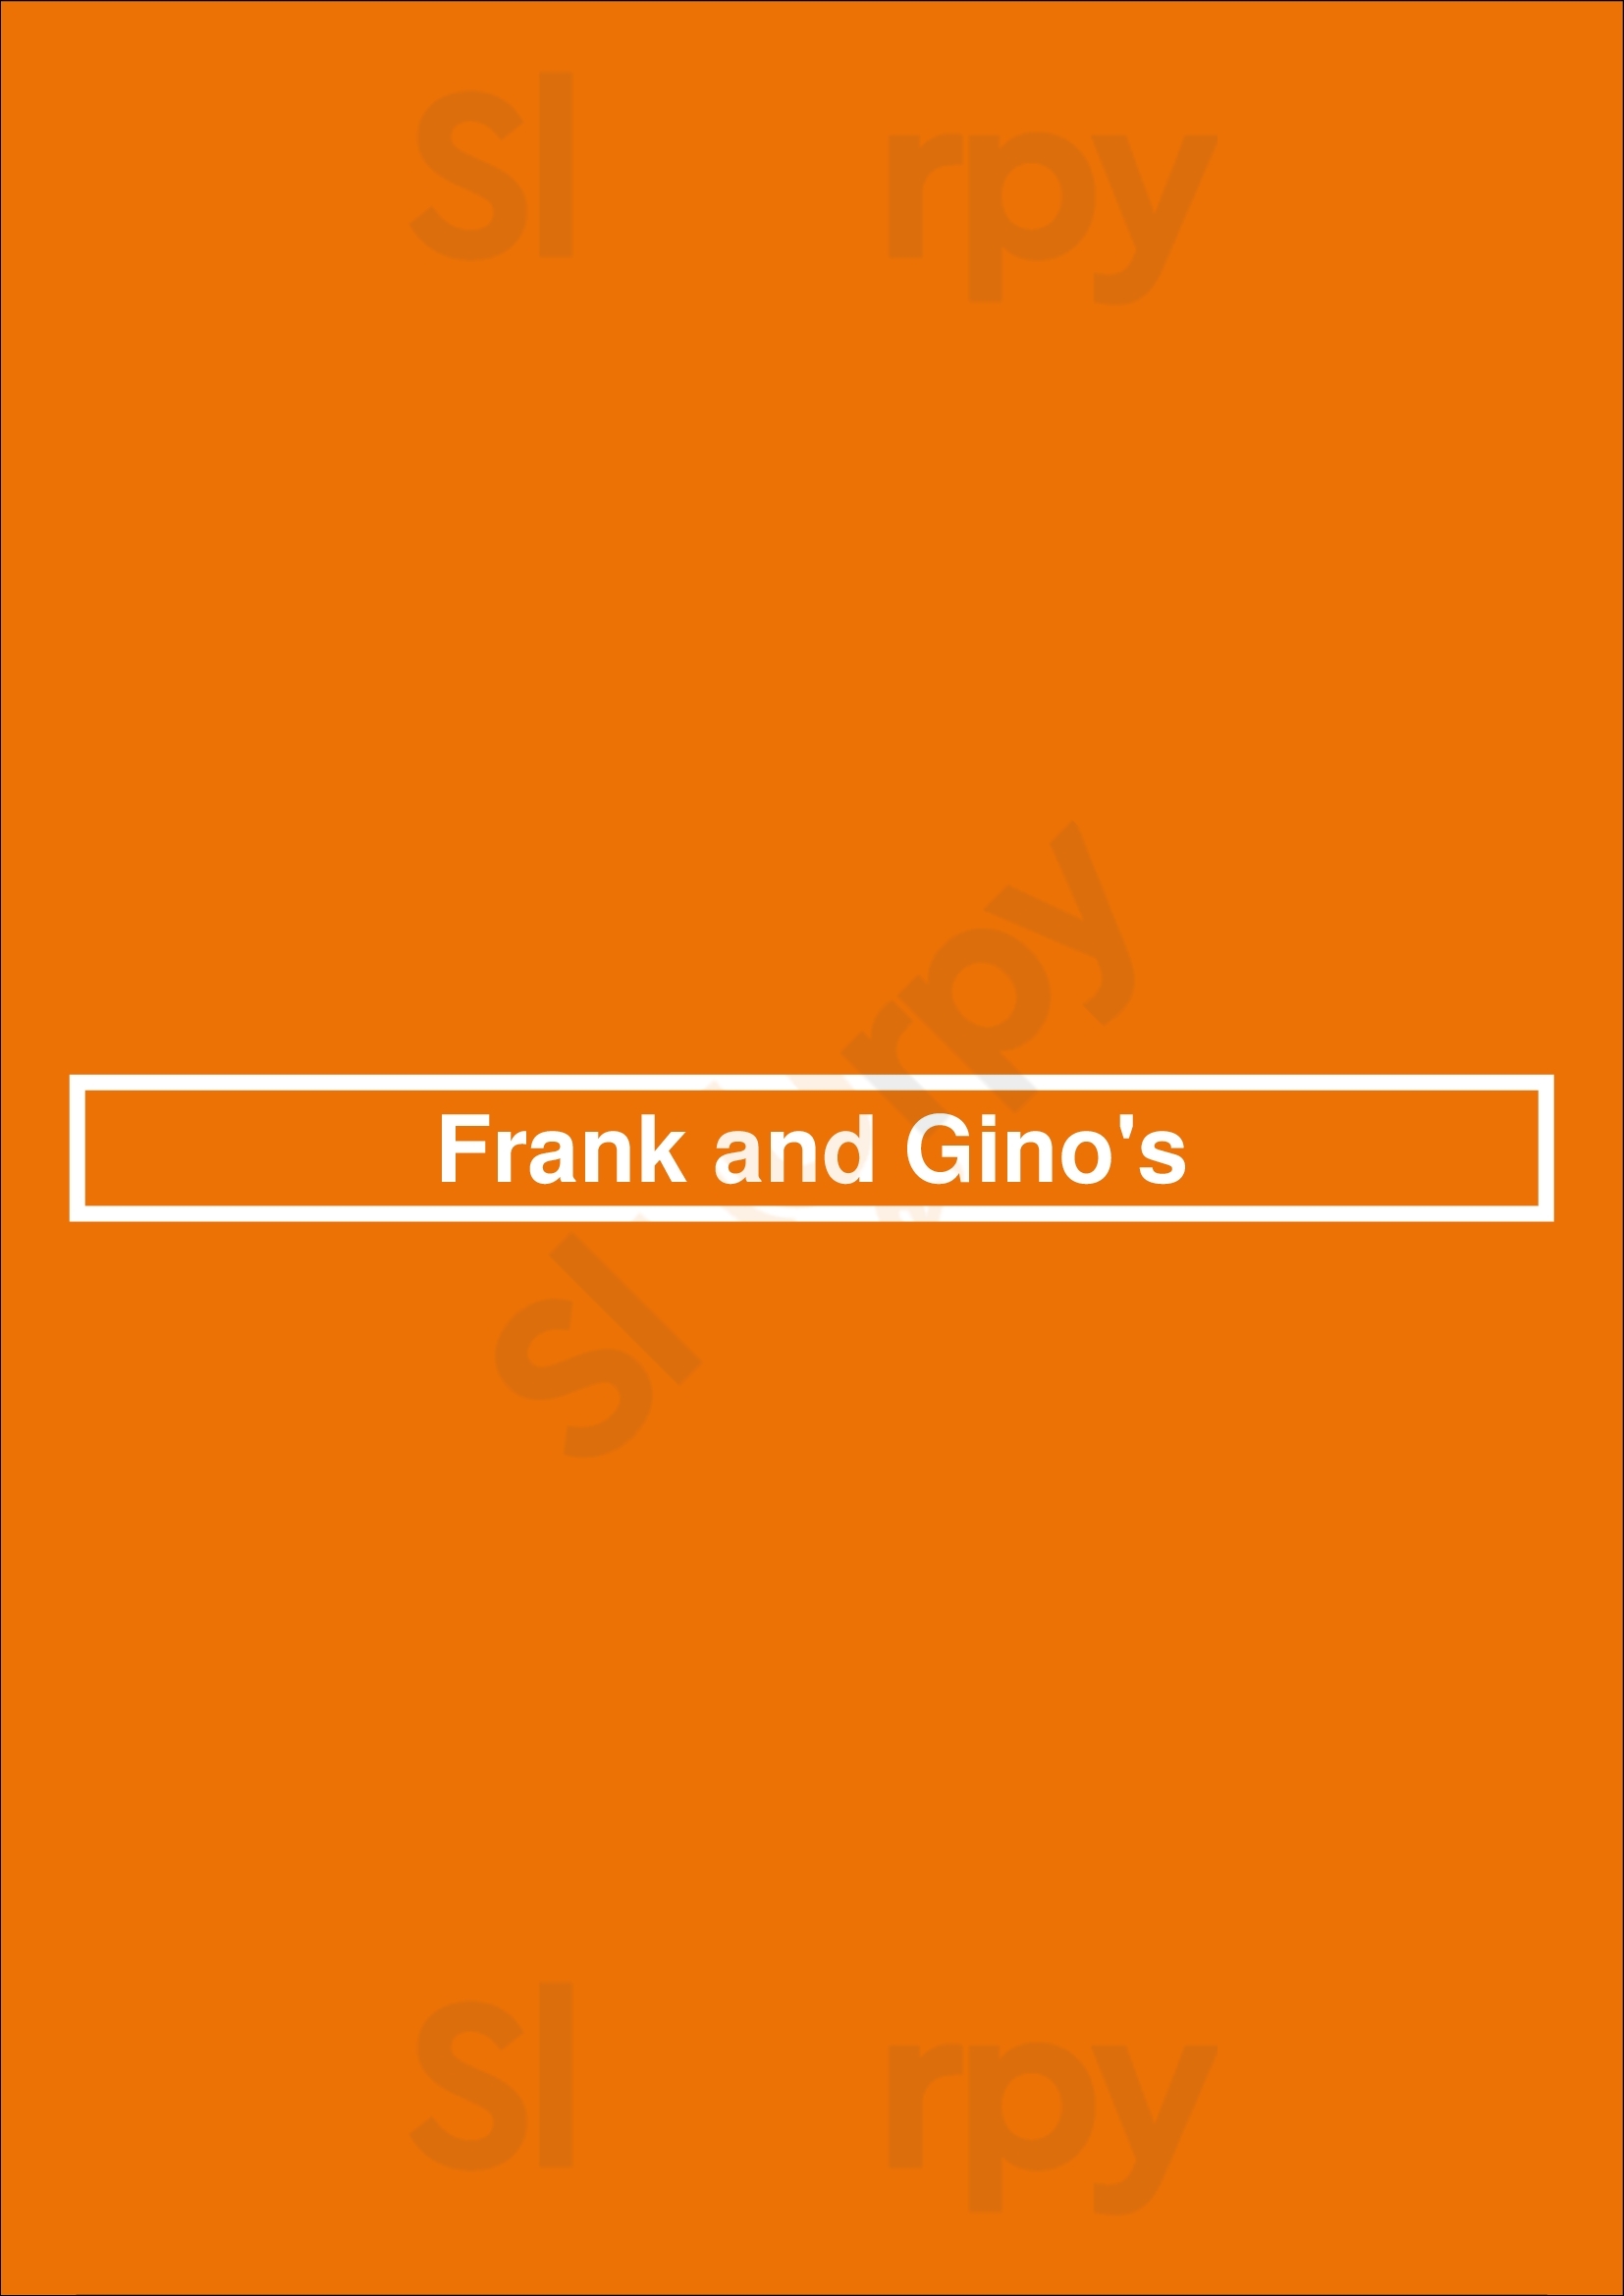 Frank & Gino's Grill & Pasta House Truro Menu - 1